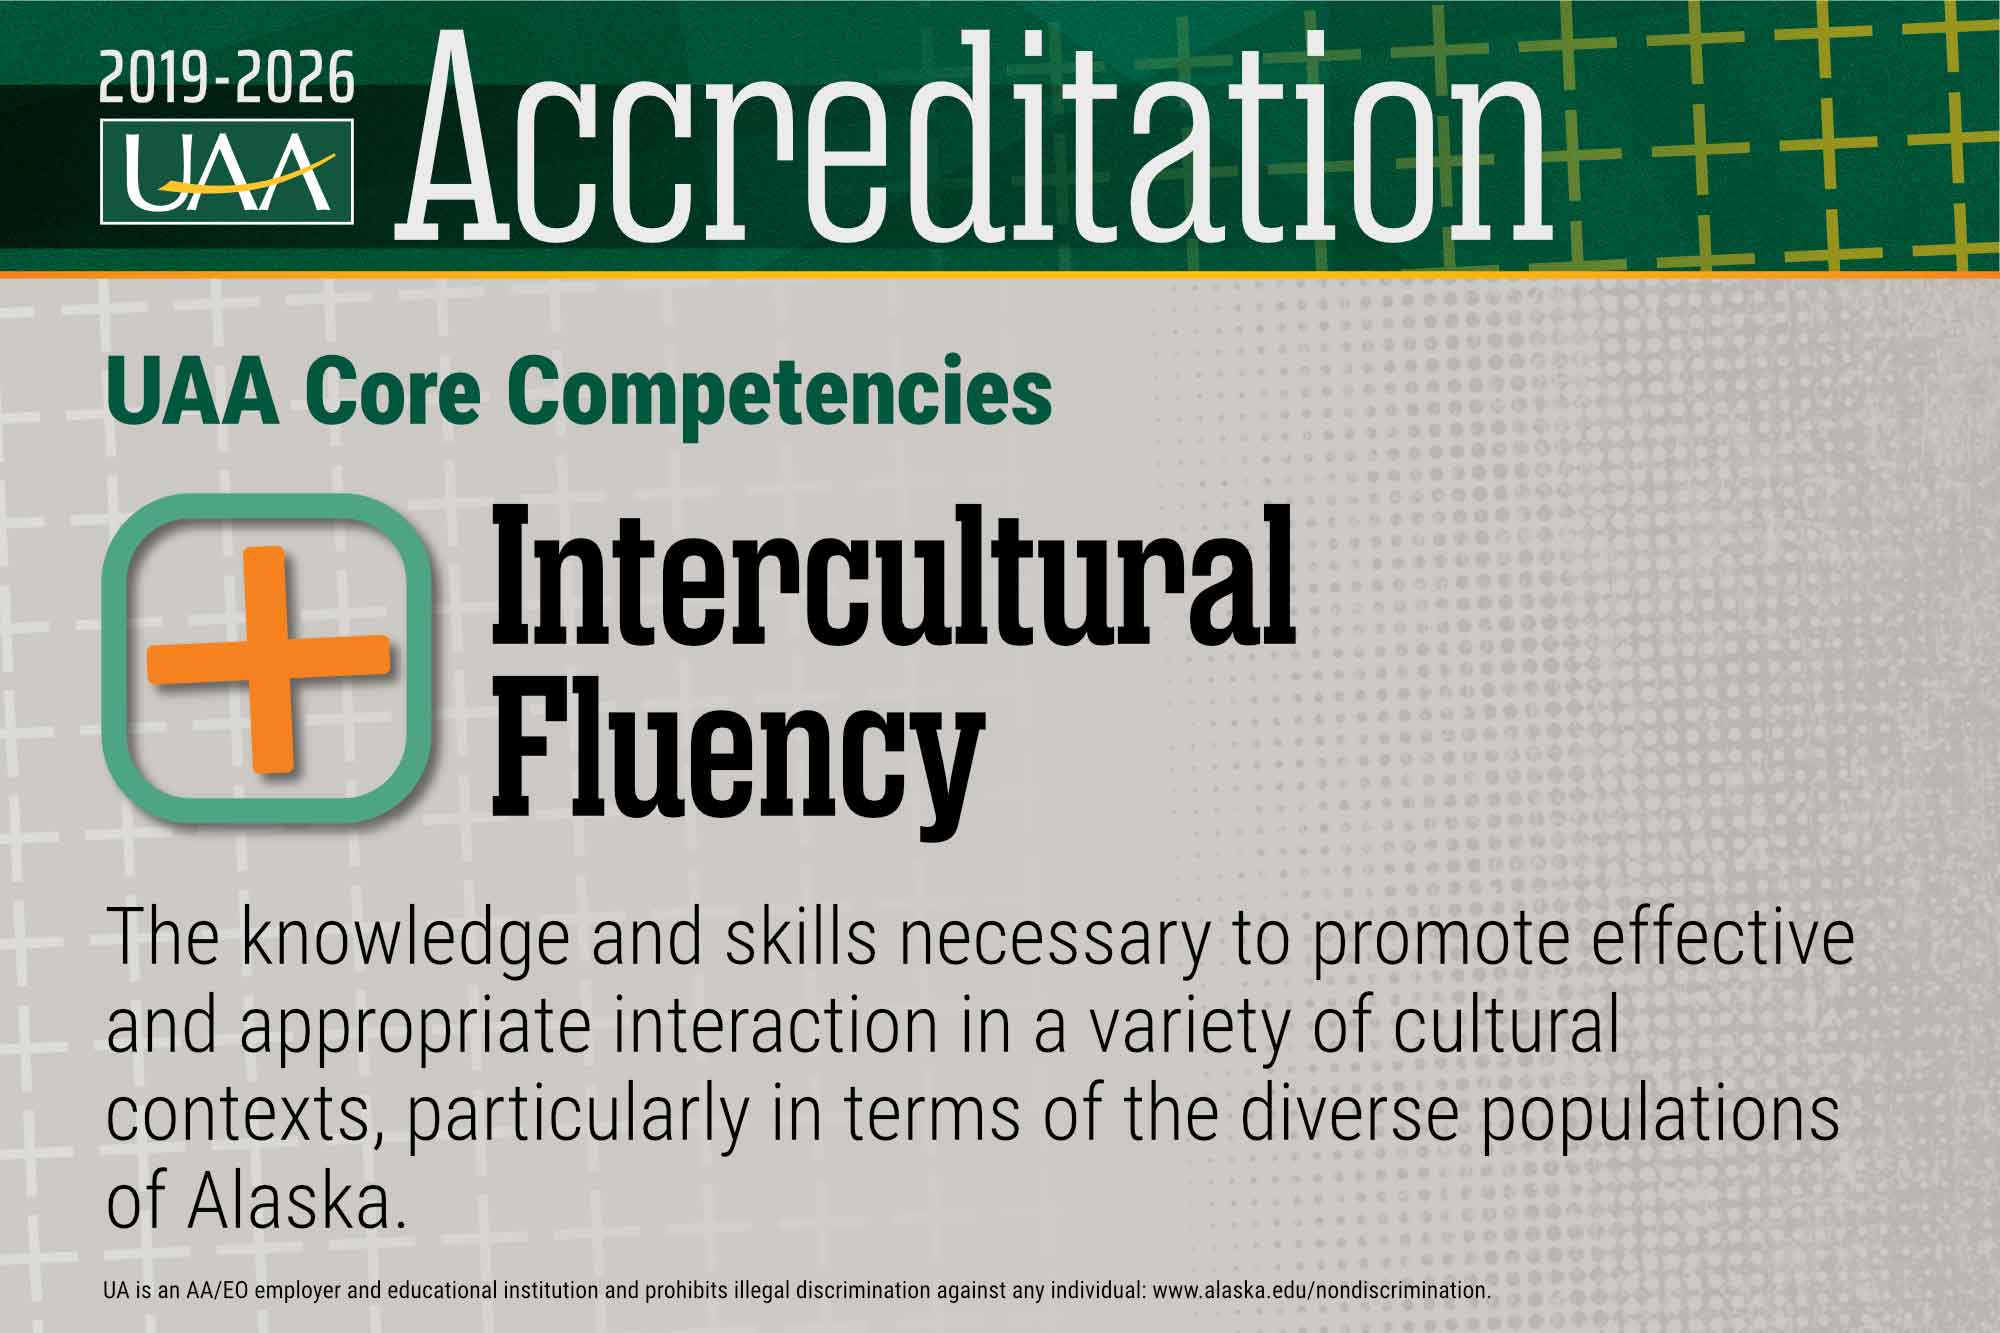 Core competency 3: Intercultural fluency